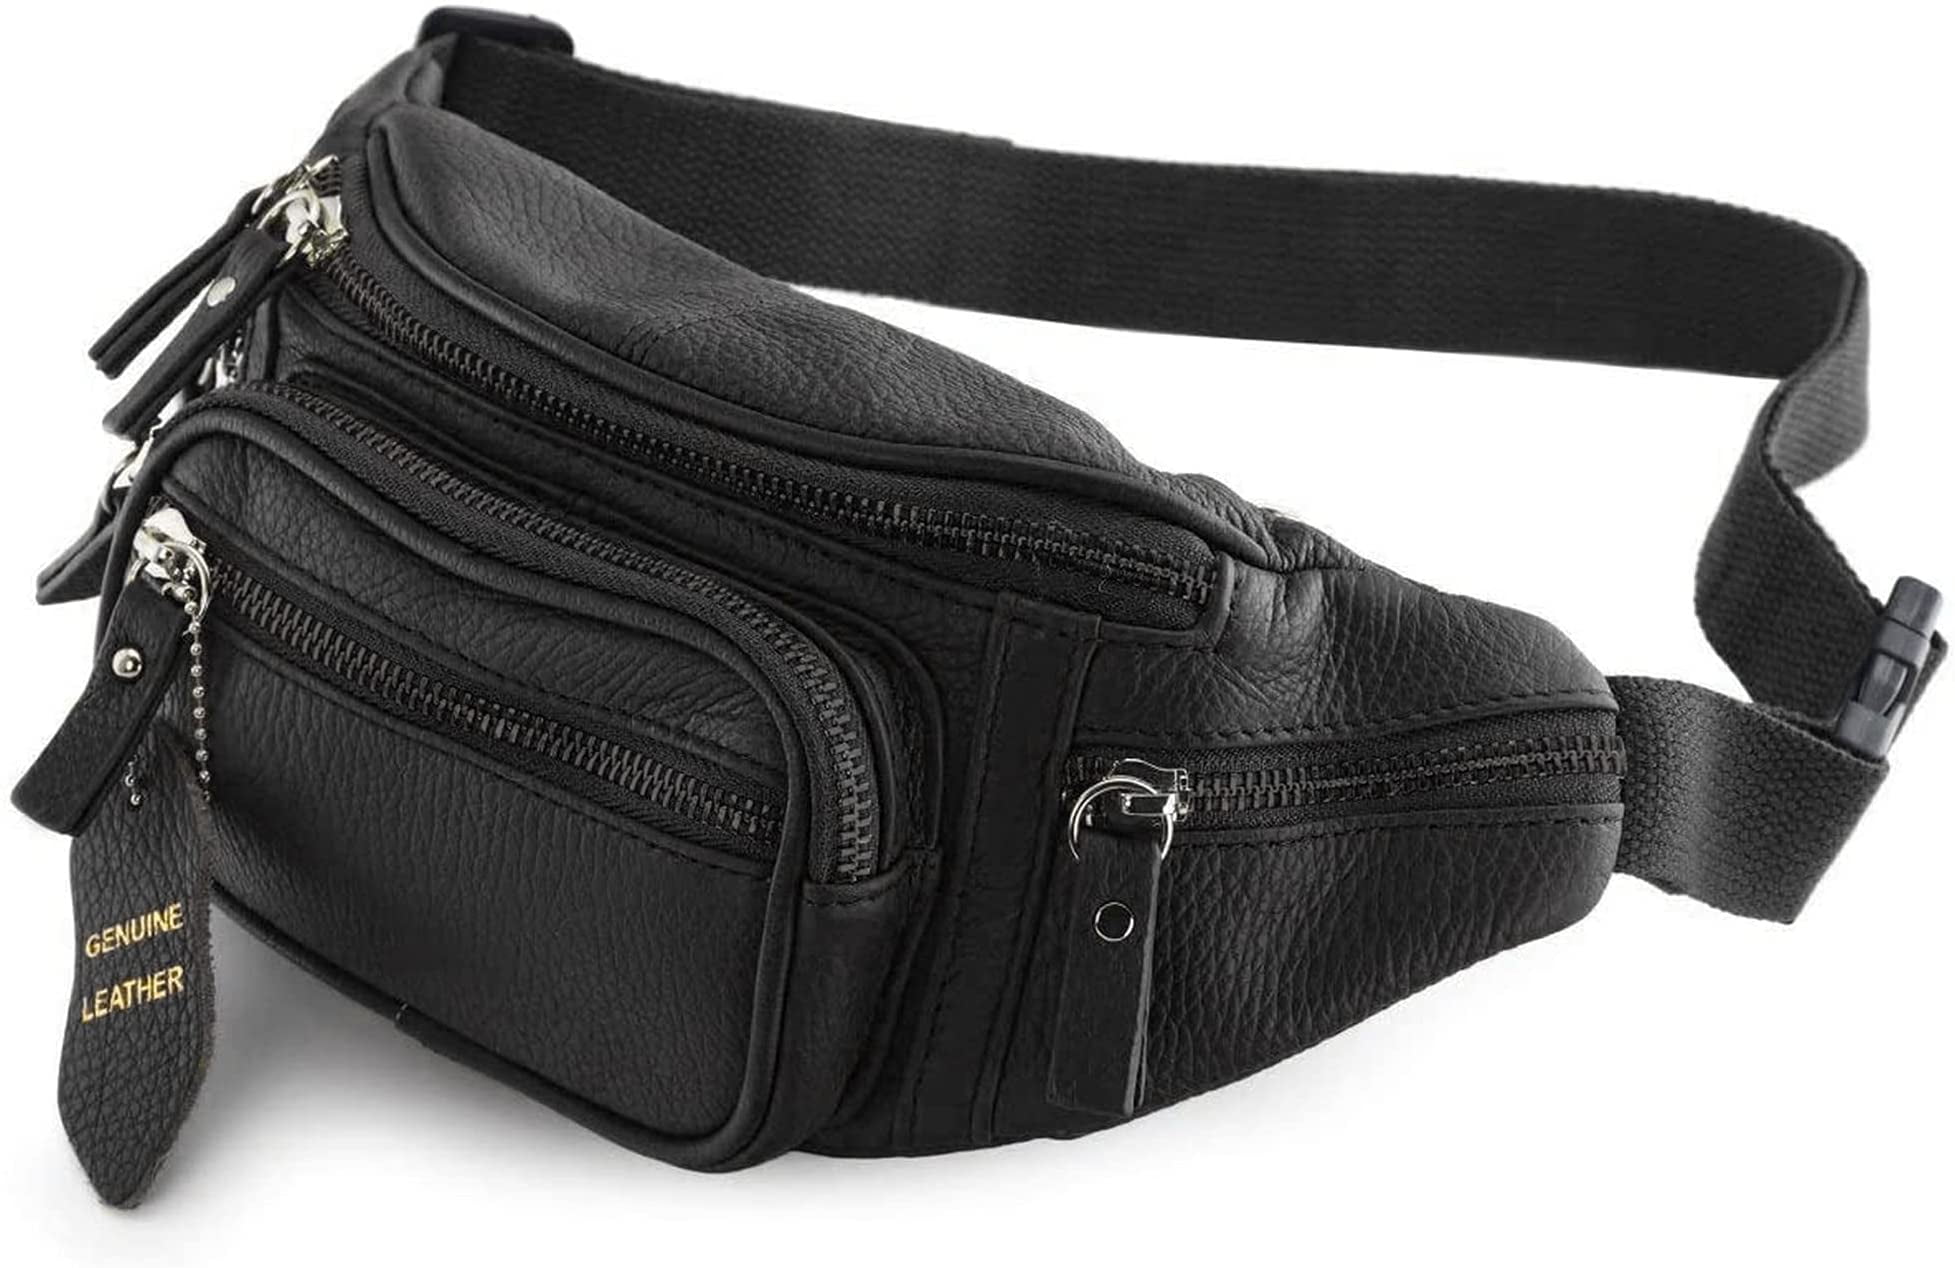 ZZNICK Genuine Leather Fanny Pack/Waist Bag/Organizer with Adjustable Belt,  Multiple Pockets Waist Pack